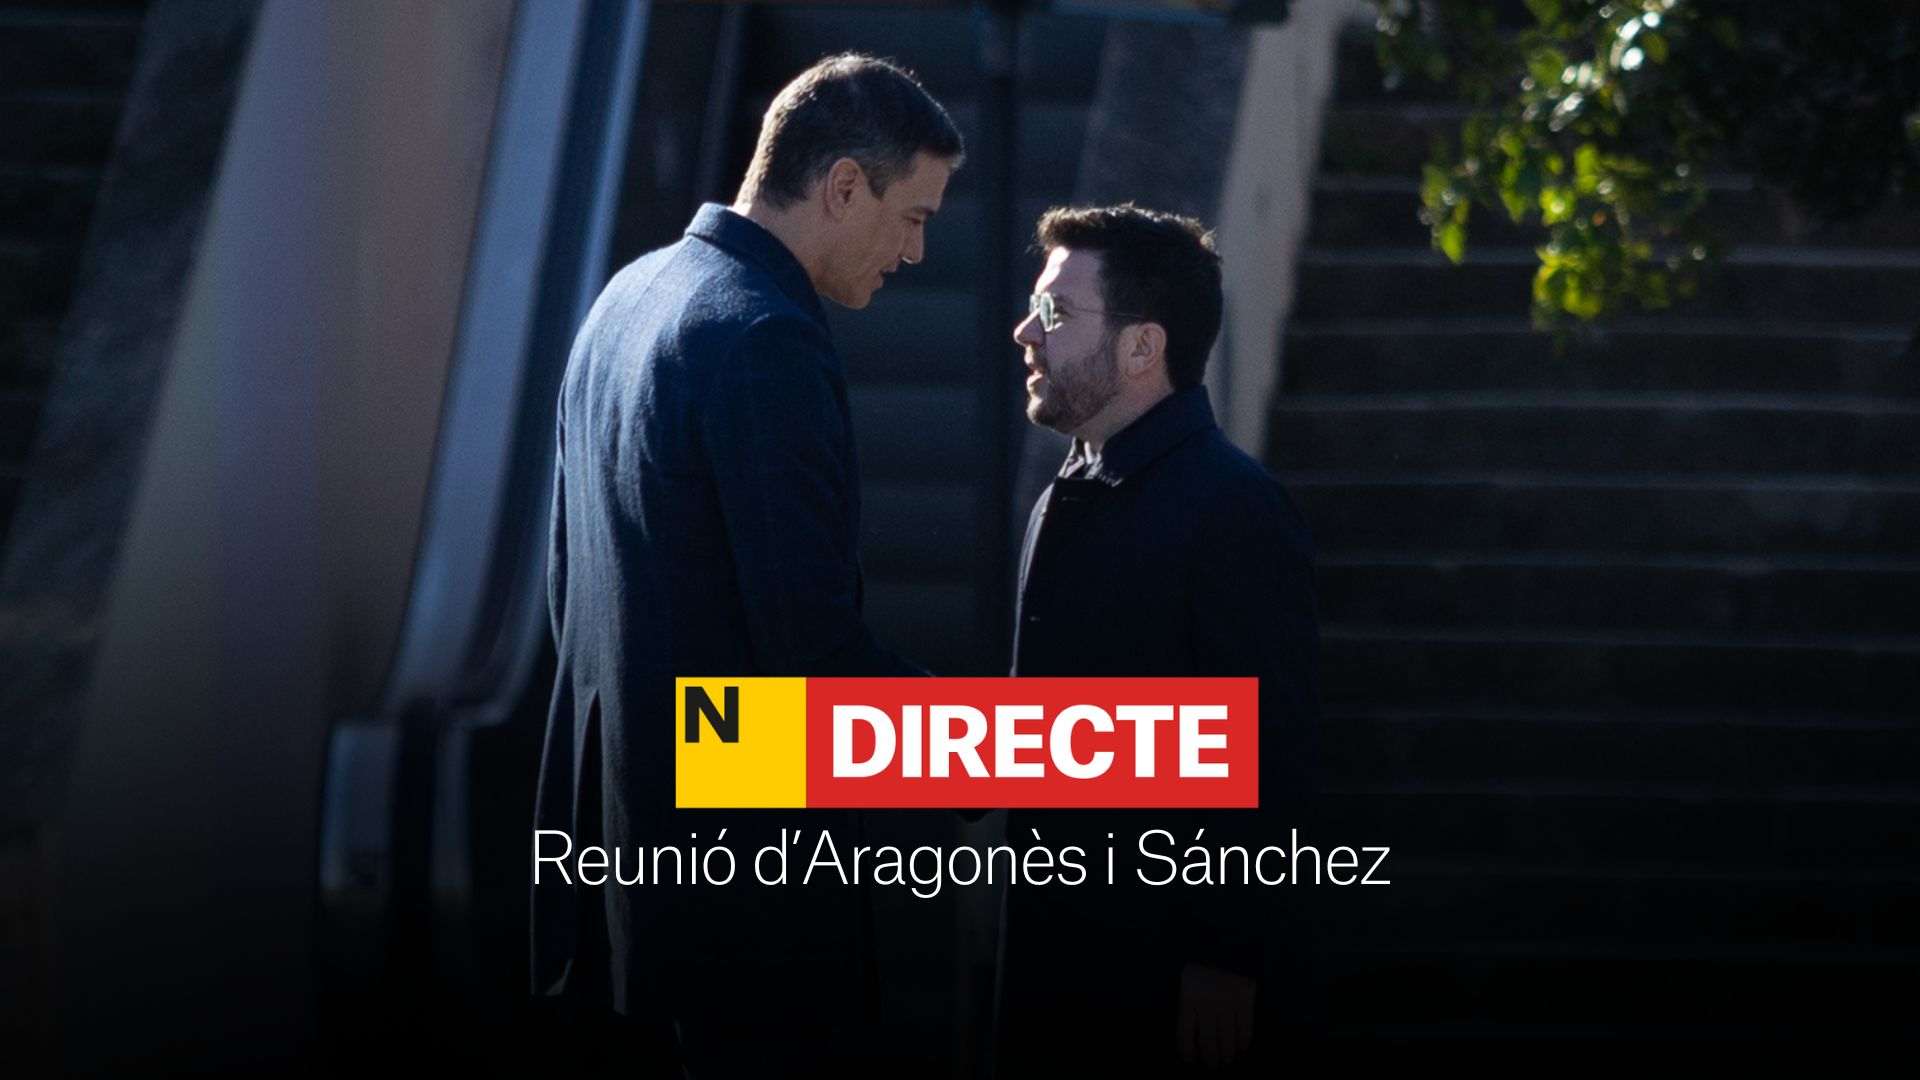 Pere Aragonès y Pedro Sánchez comparecen en la Generalitat, DIRECTO